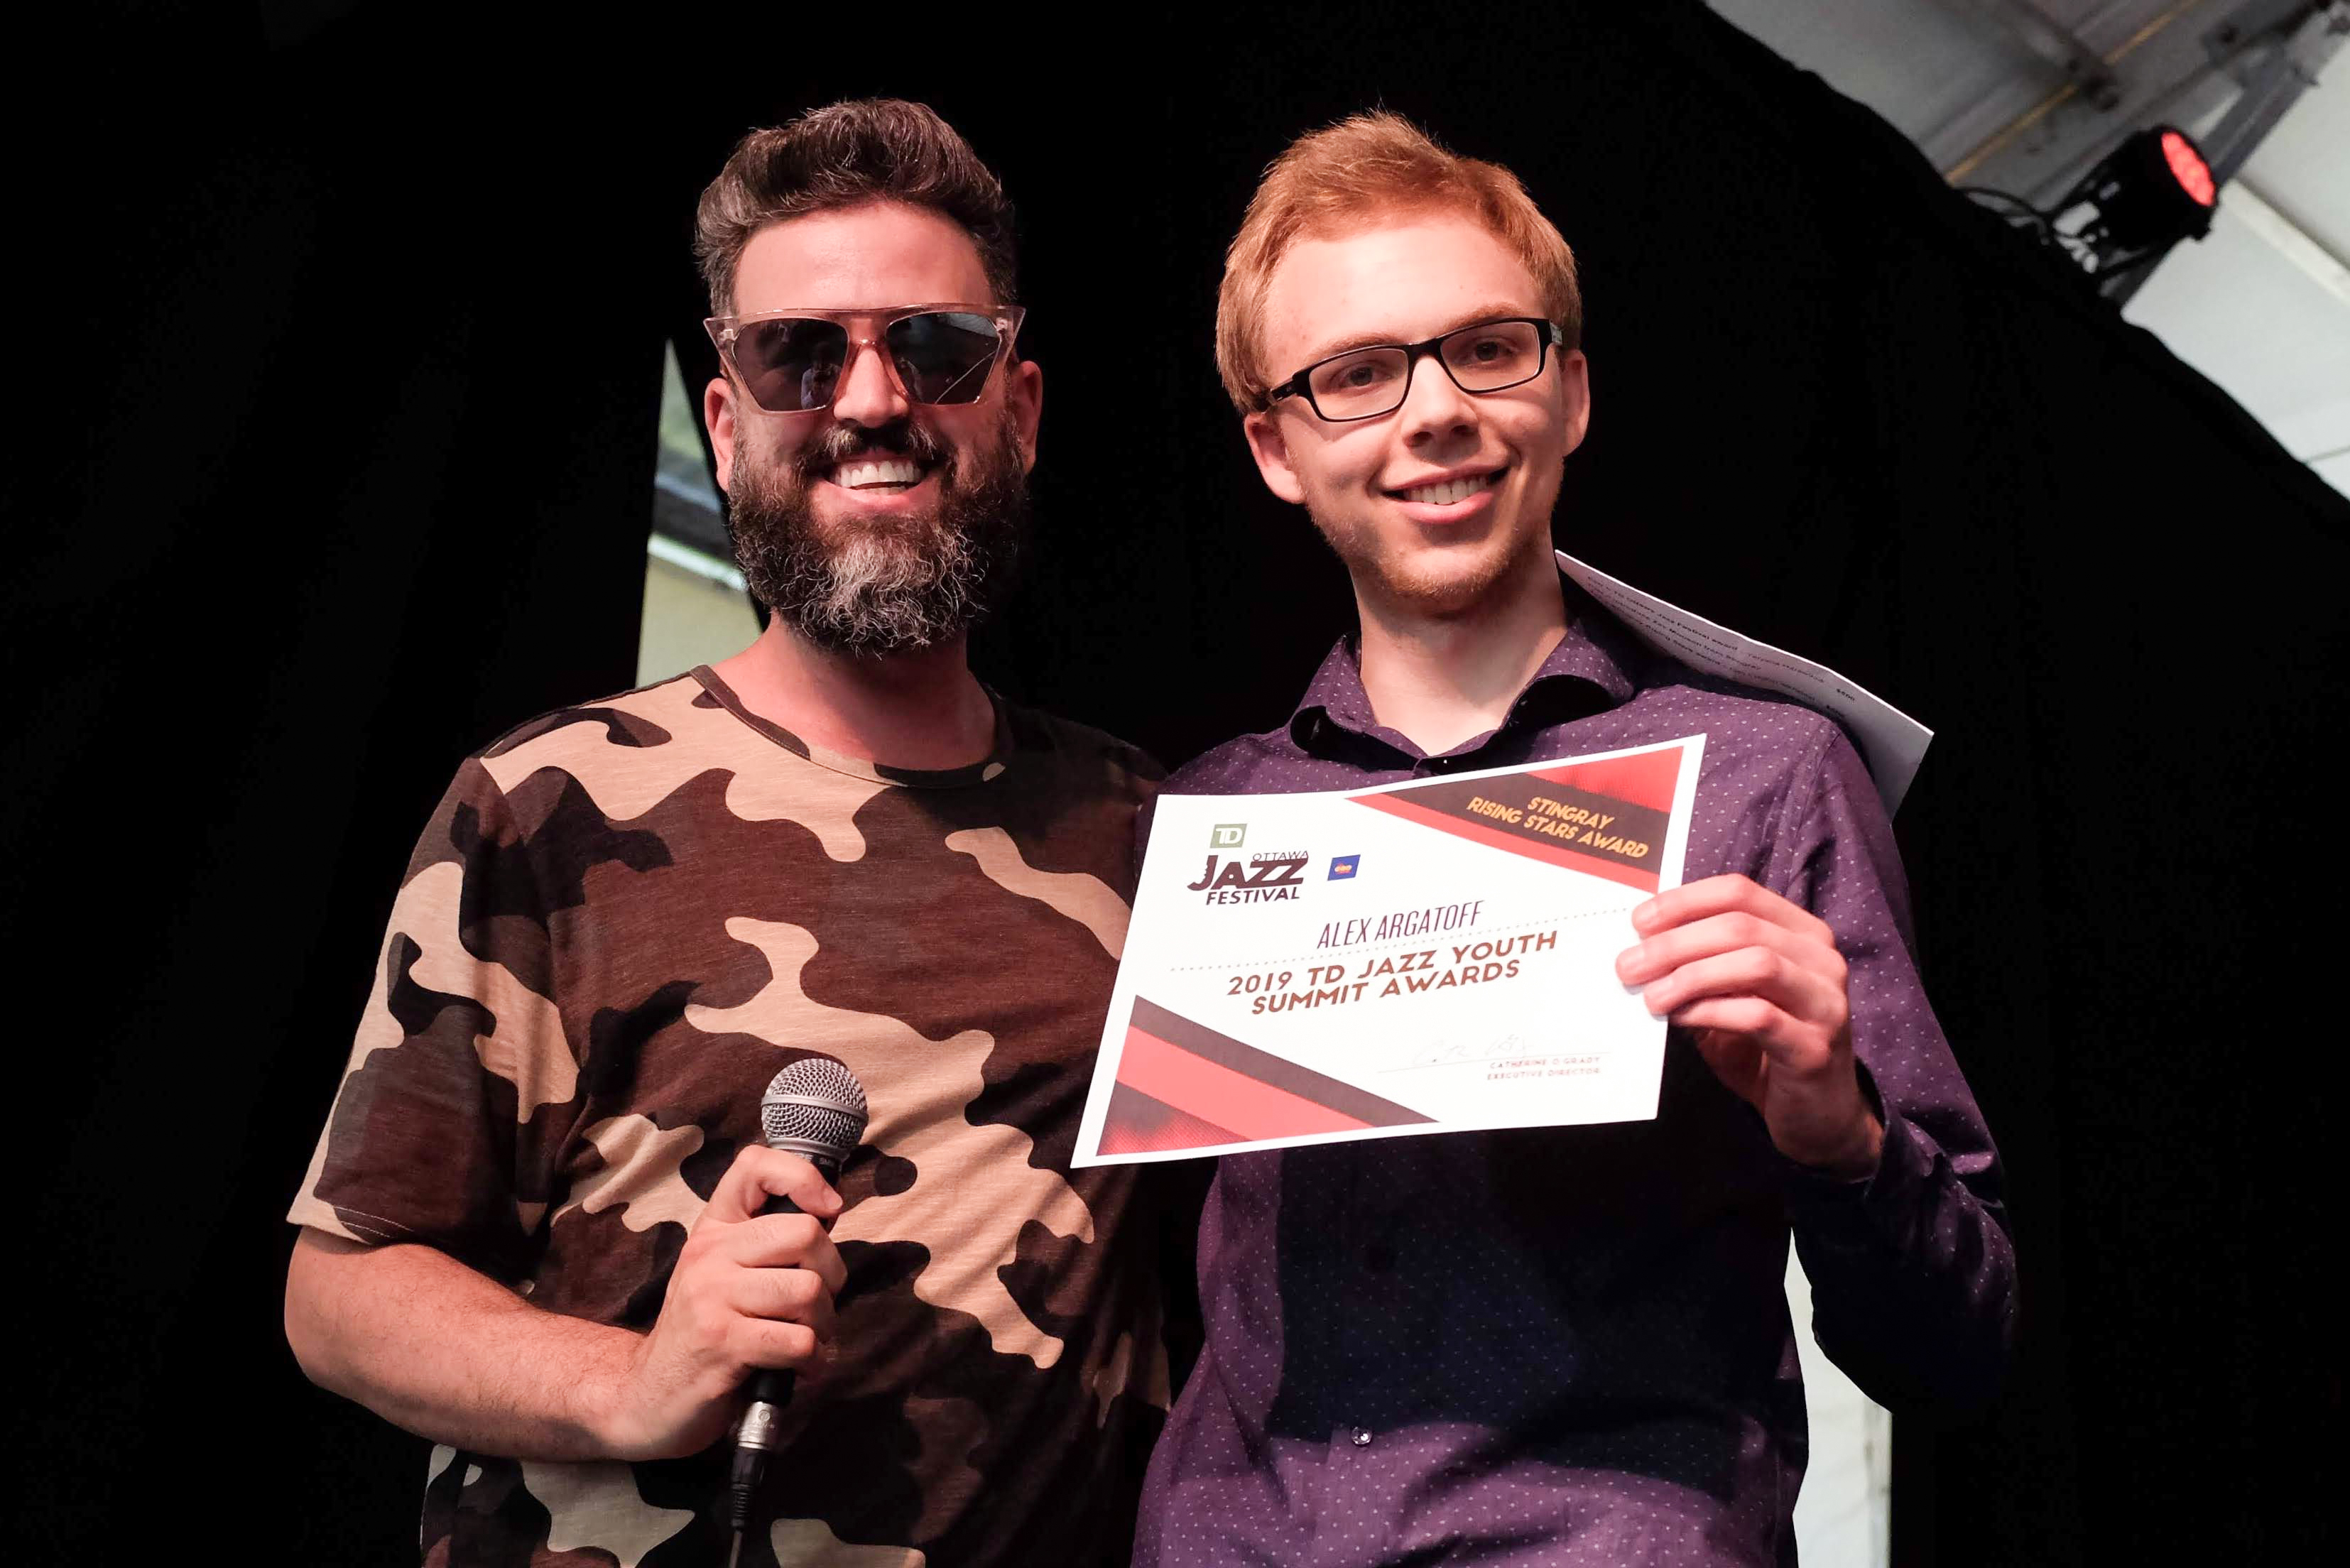 Zachary Monson with Stingray Rising Stars award winner Alex Argatoff